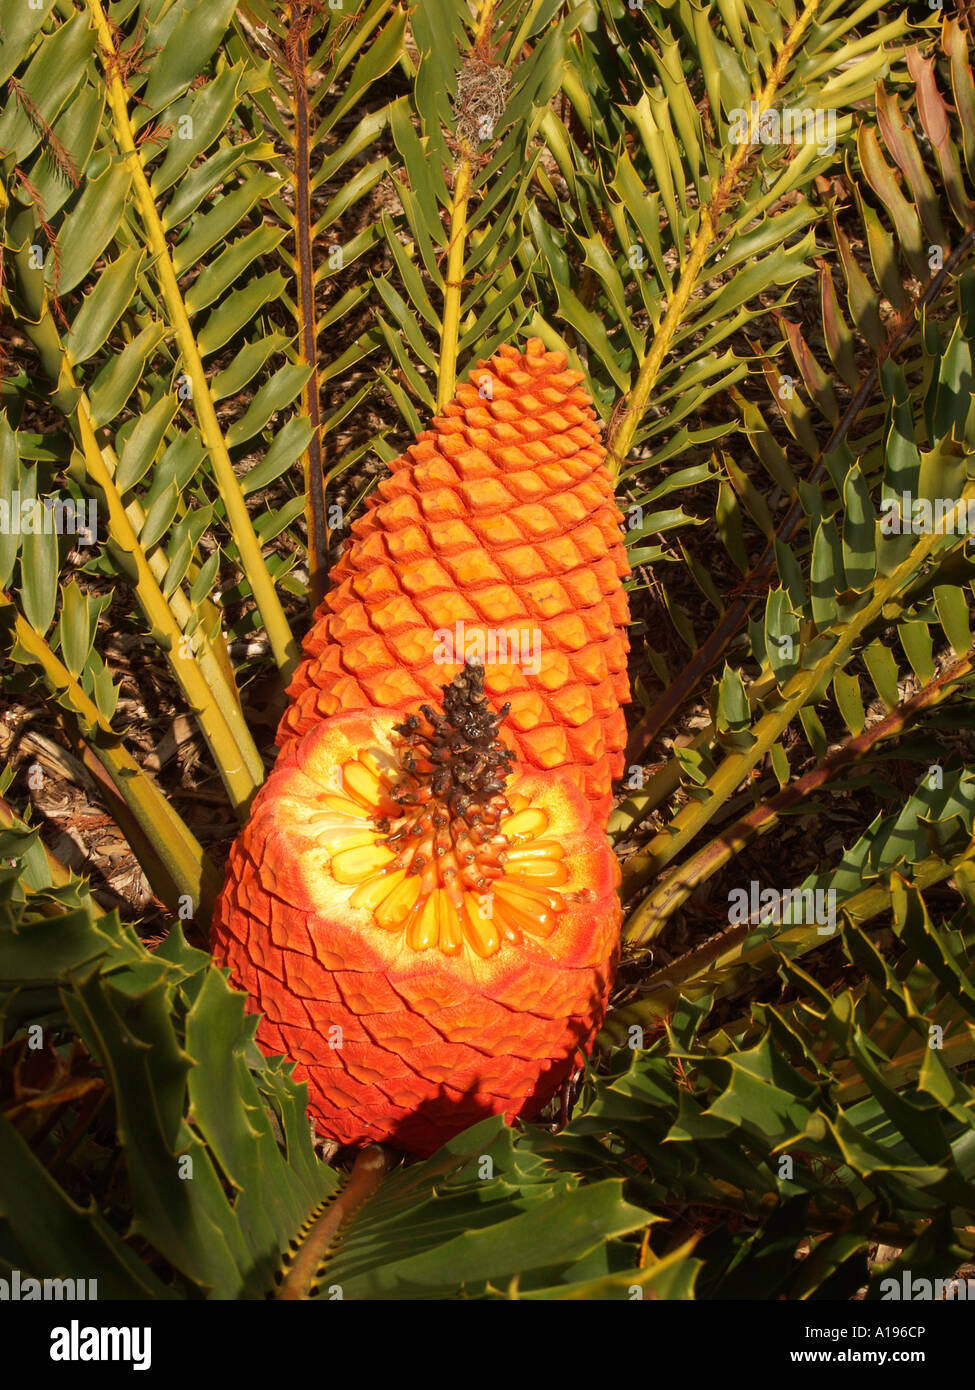 Bright orange fruit and seeds of a zamia palm Zamia encephalatos ferox among the plants emerald green foliage Stock Photo